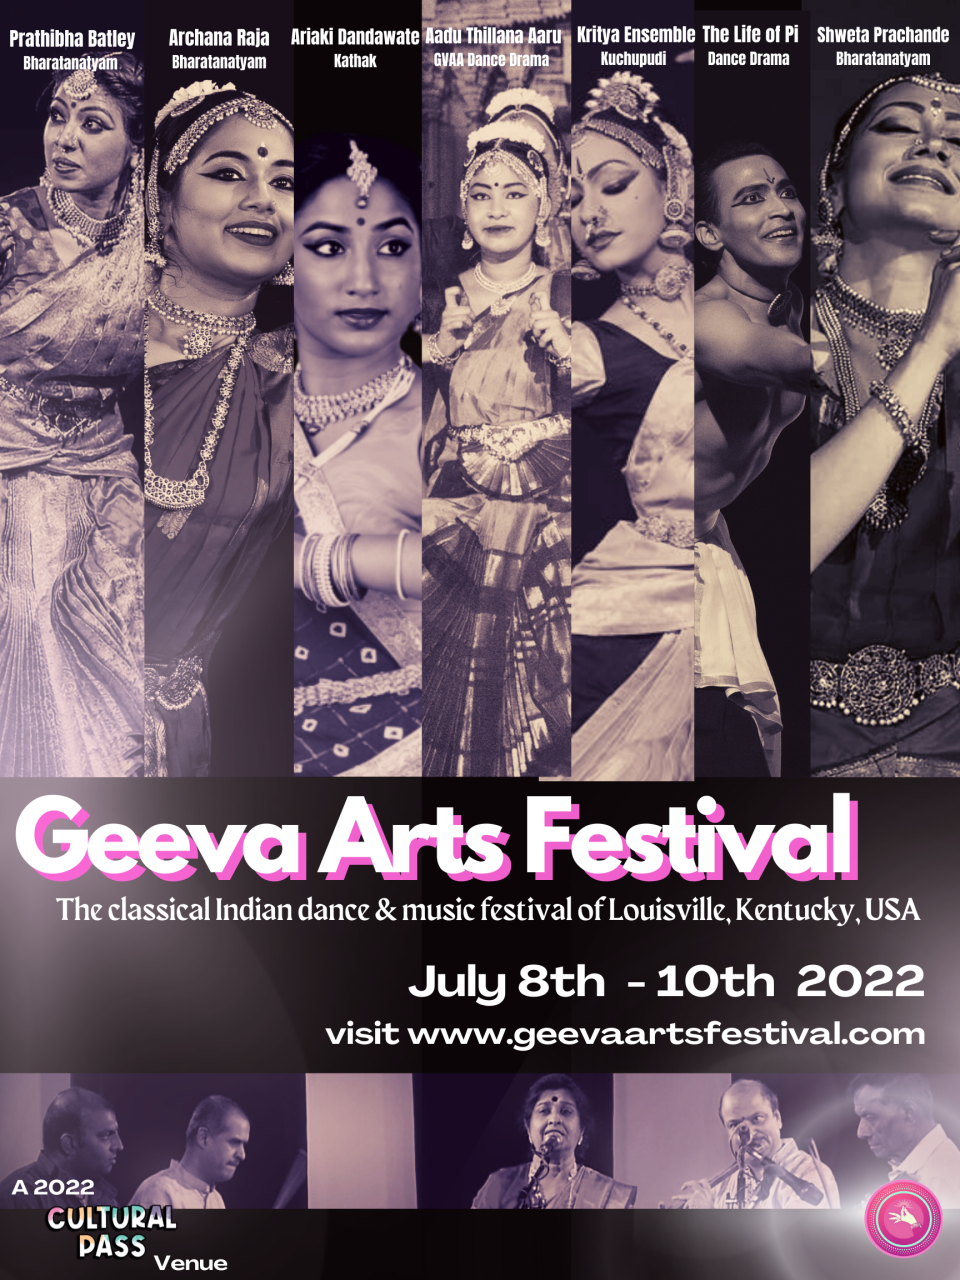 Geeva Arts Festival promotional poster